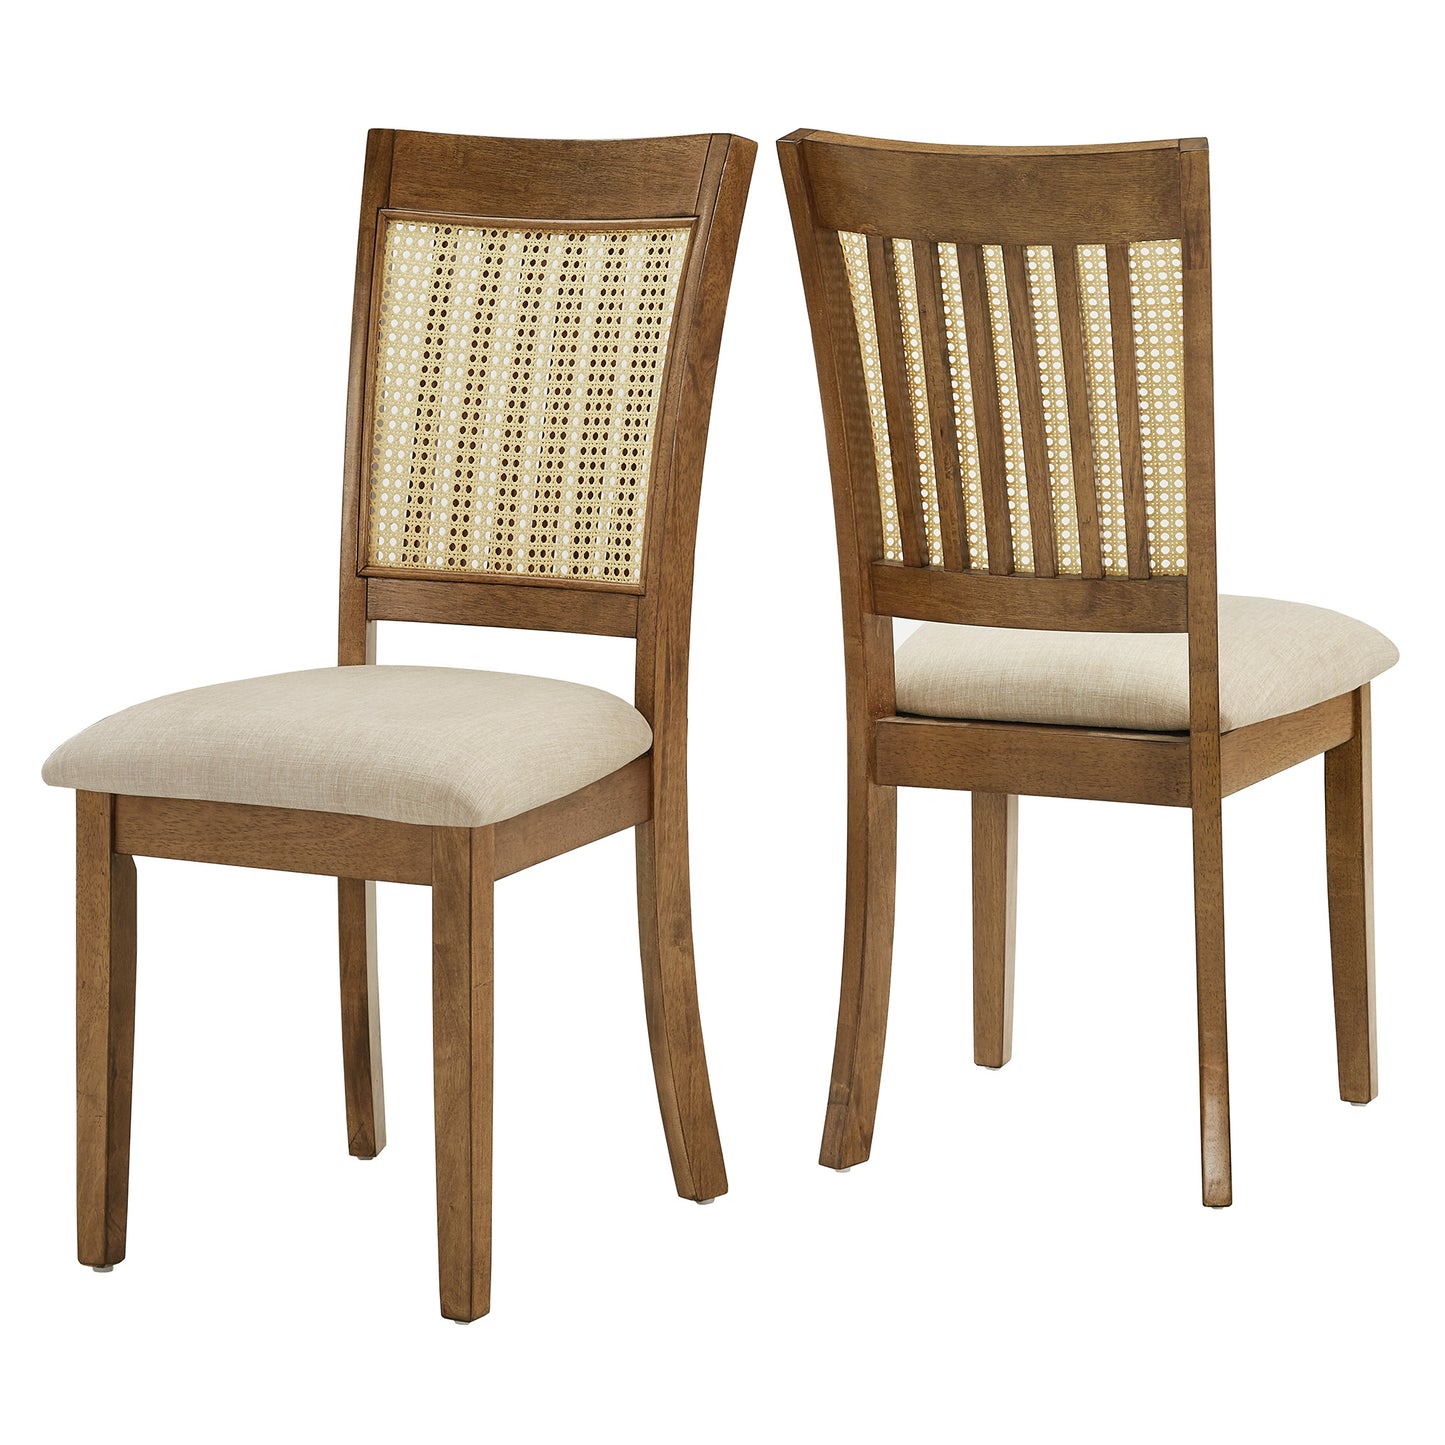 Cane Accent Dining - Slat Back Chair (Set of 2), Oak Finish, Beige Linen